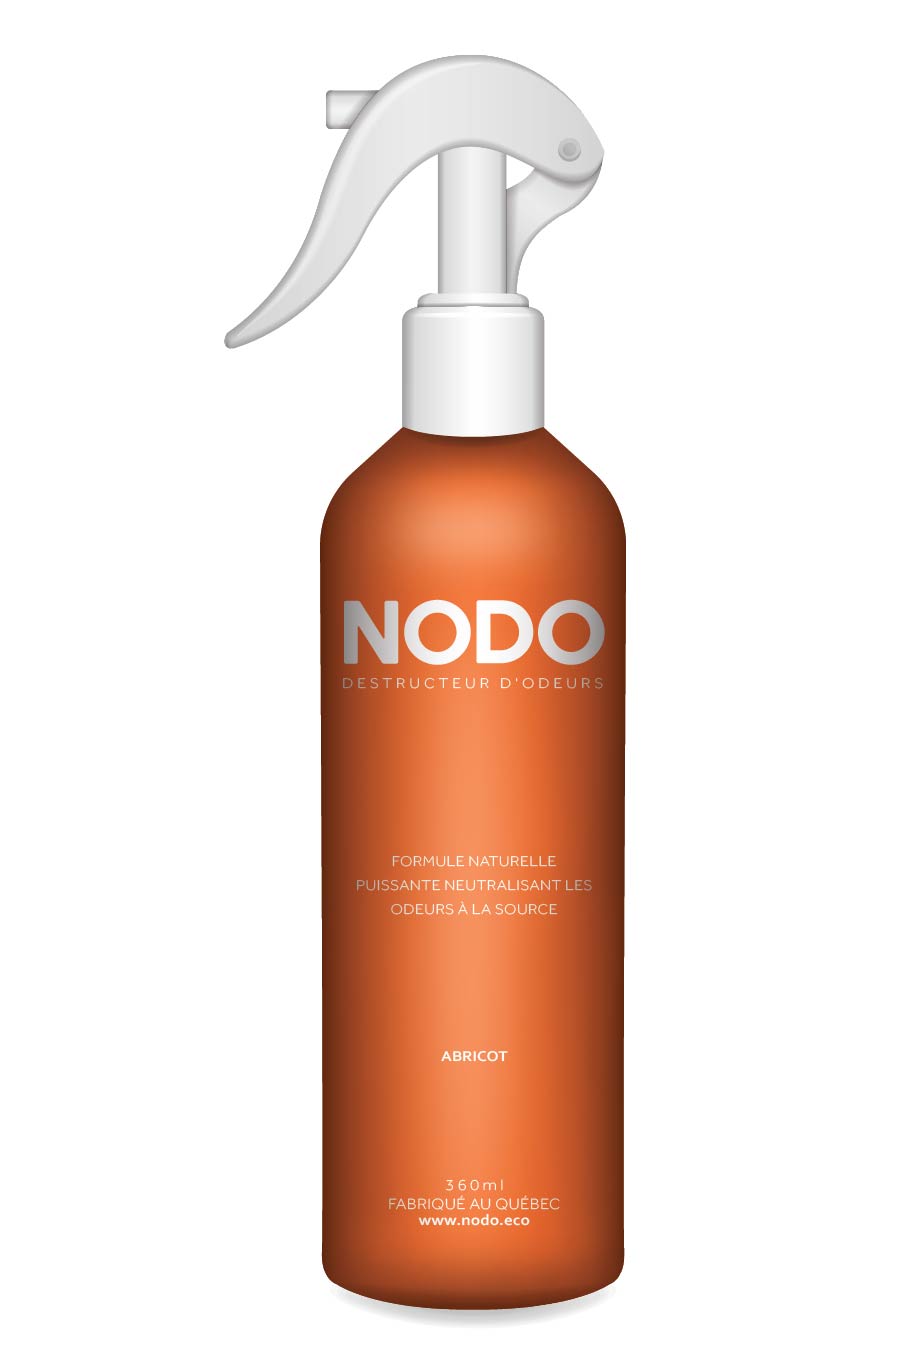 Neutralisant d'odeur NODO en spray à l'abricot